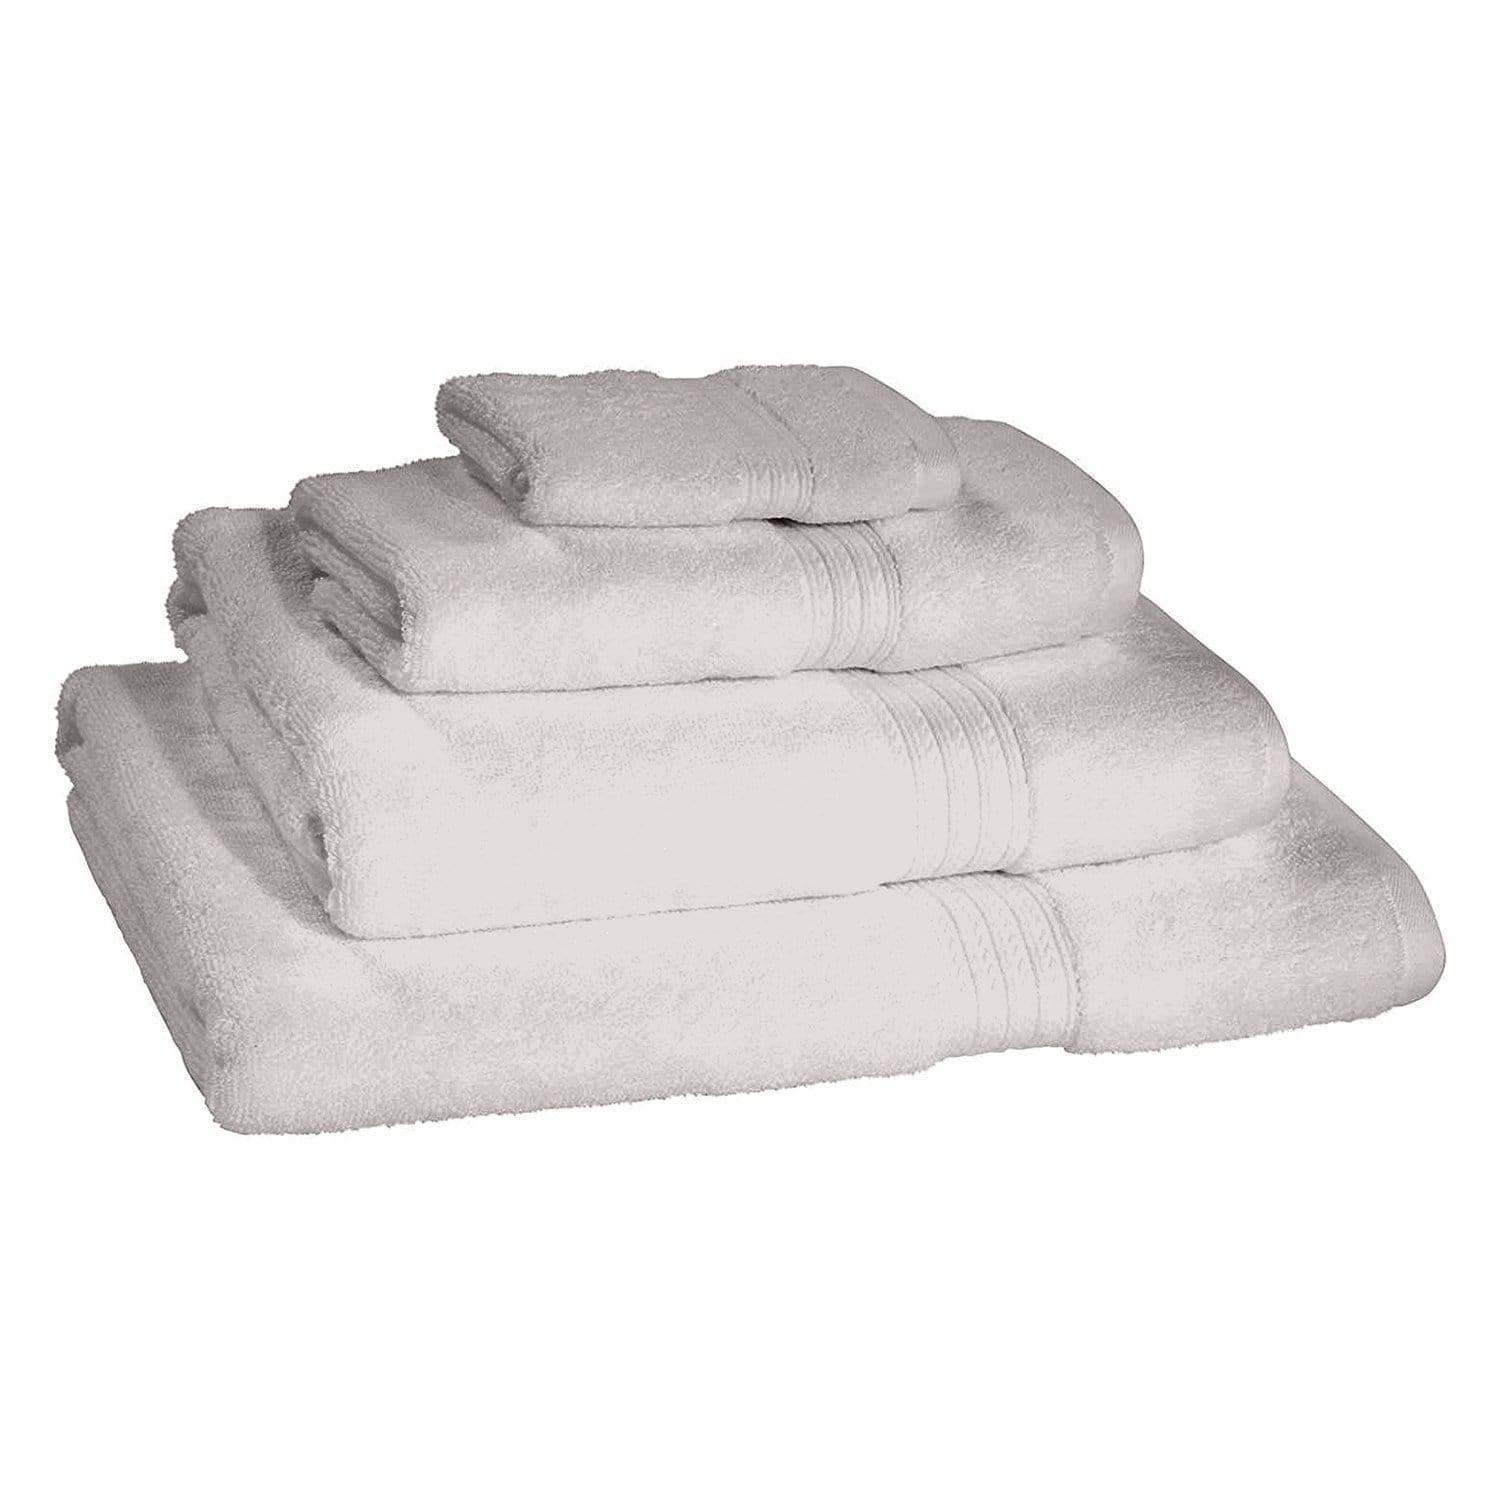 Kassatex Kassadesign Hand Towel - Dolphin Grey - KDK-110-DPG - Jashanmal Home